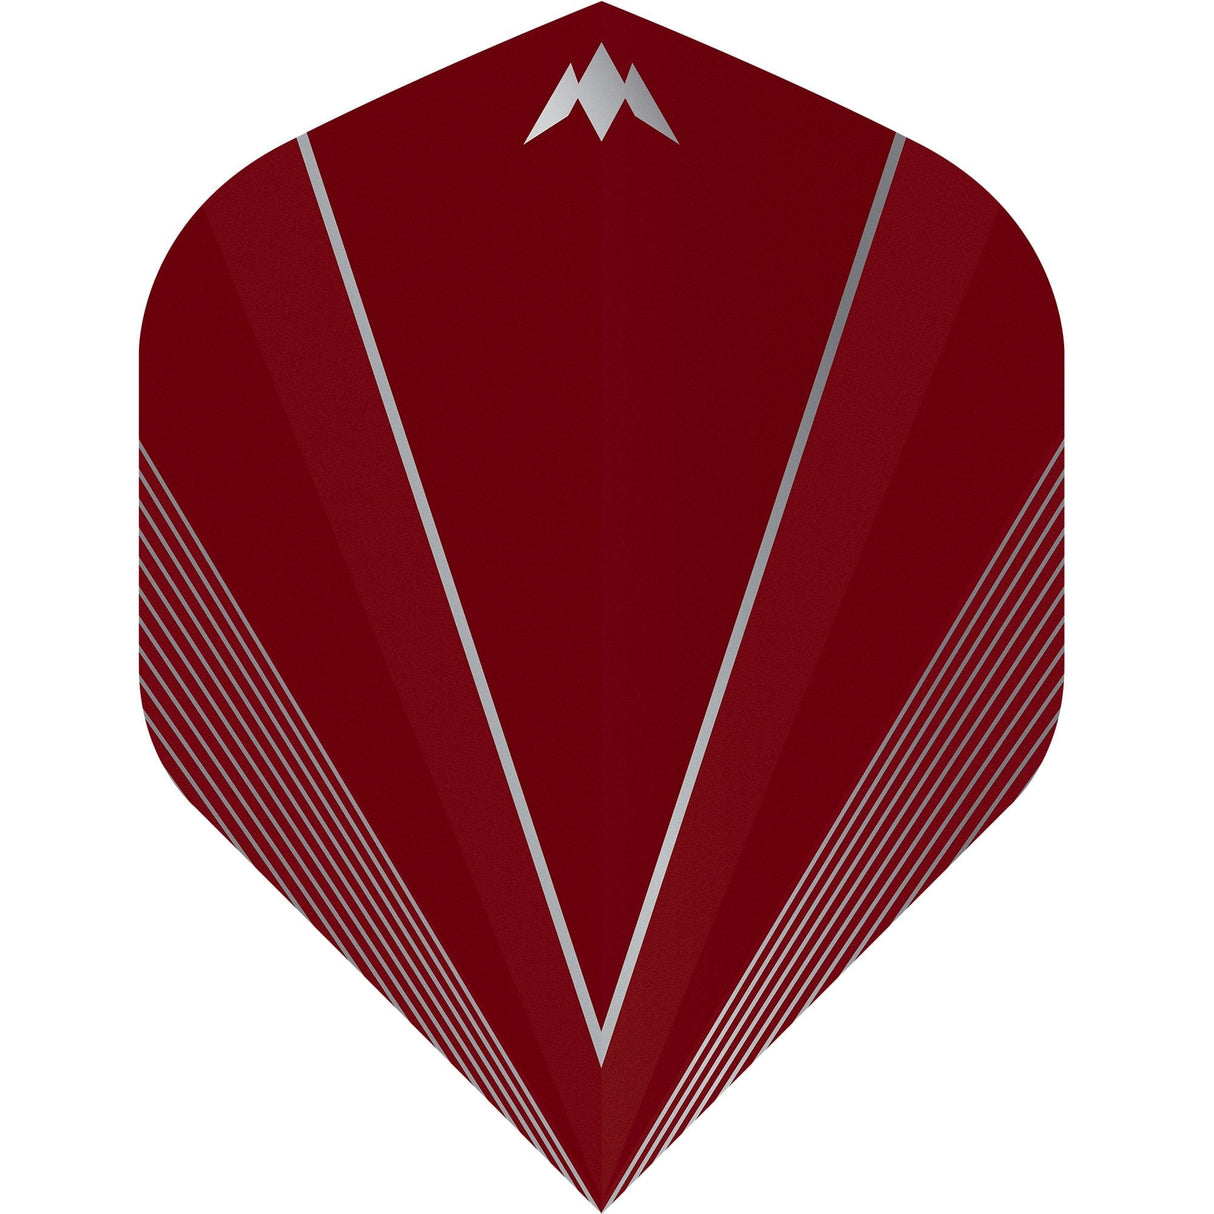 Mission Shades Dart Flights - 100 Micron - No2 - Std Red